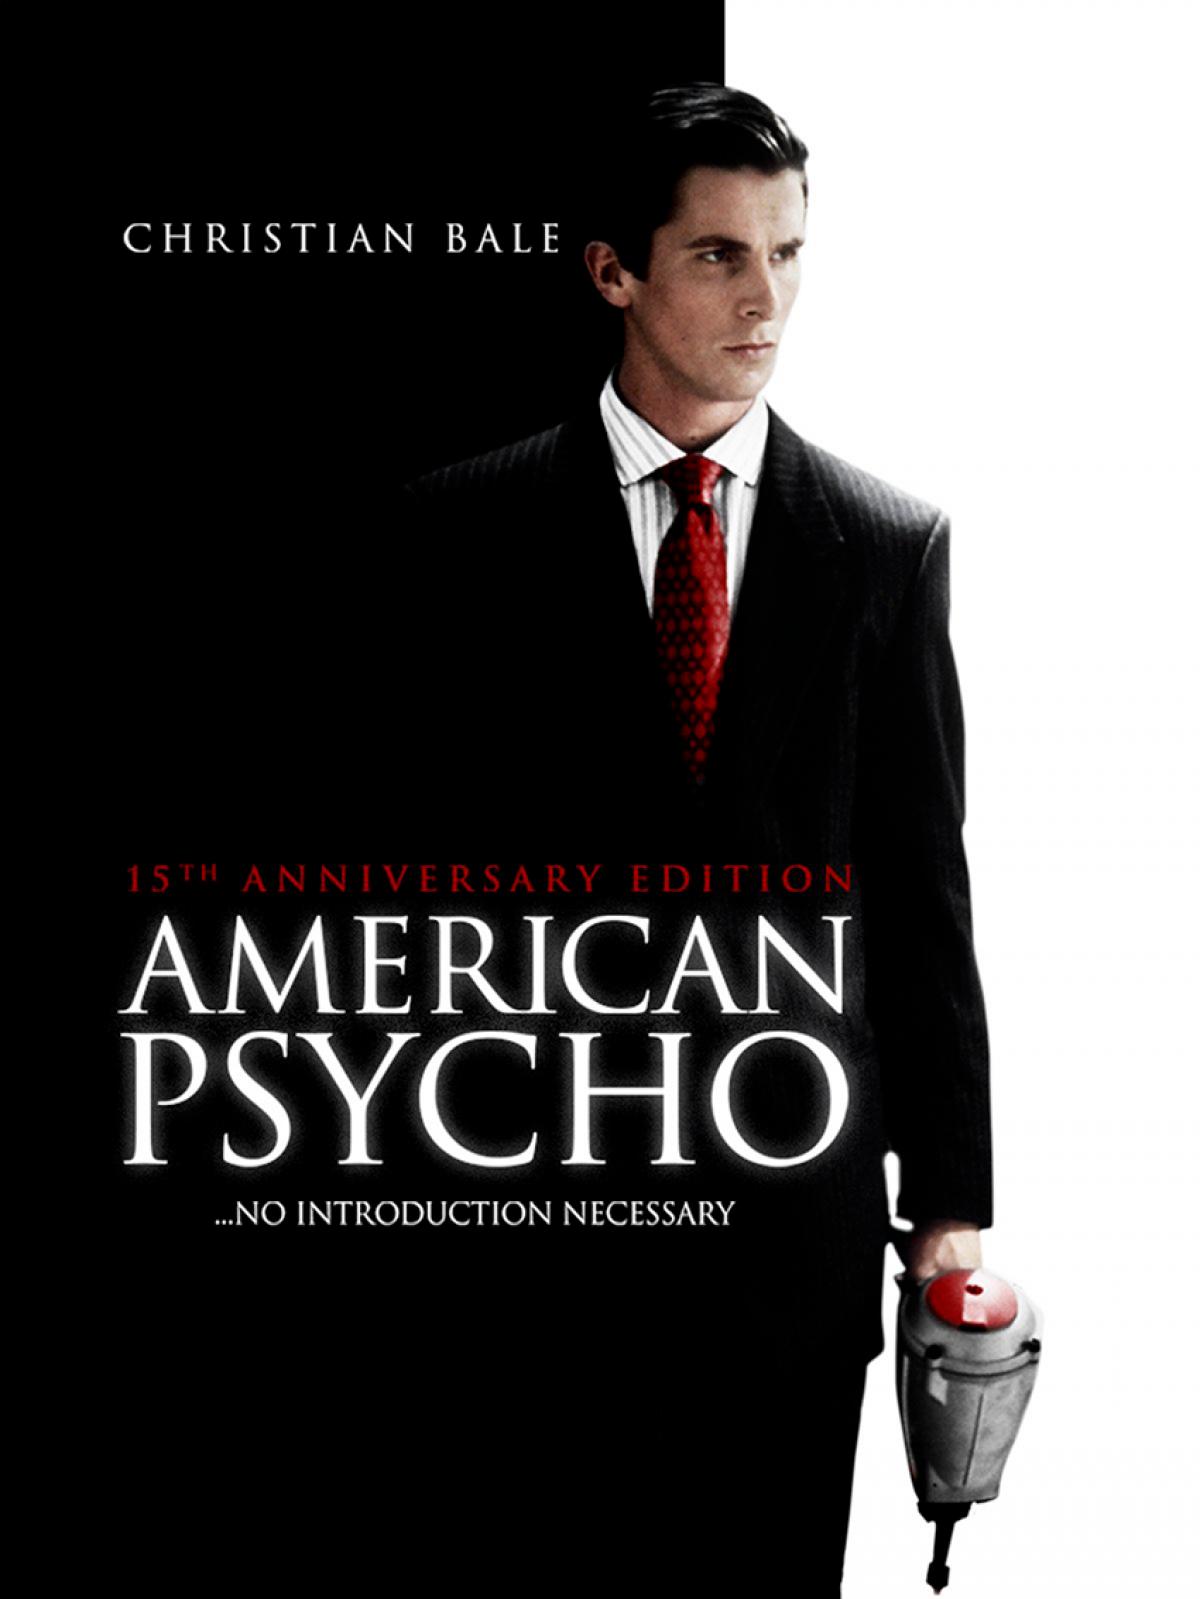 American Psycho - 2000